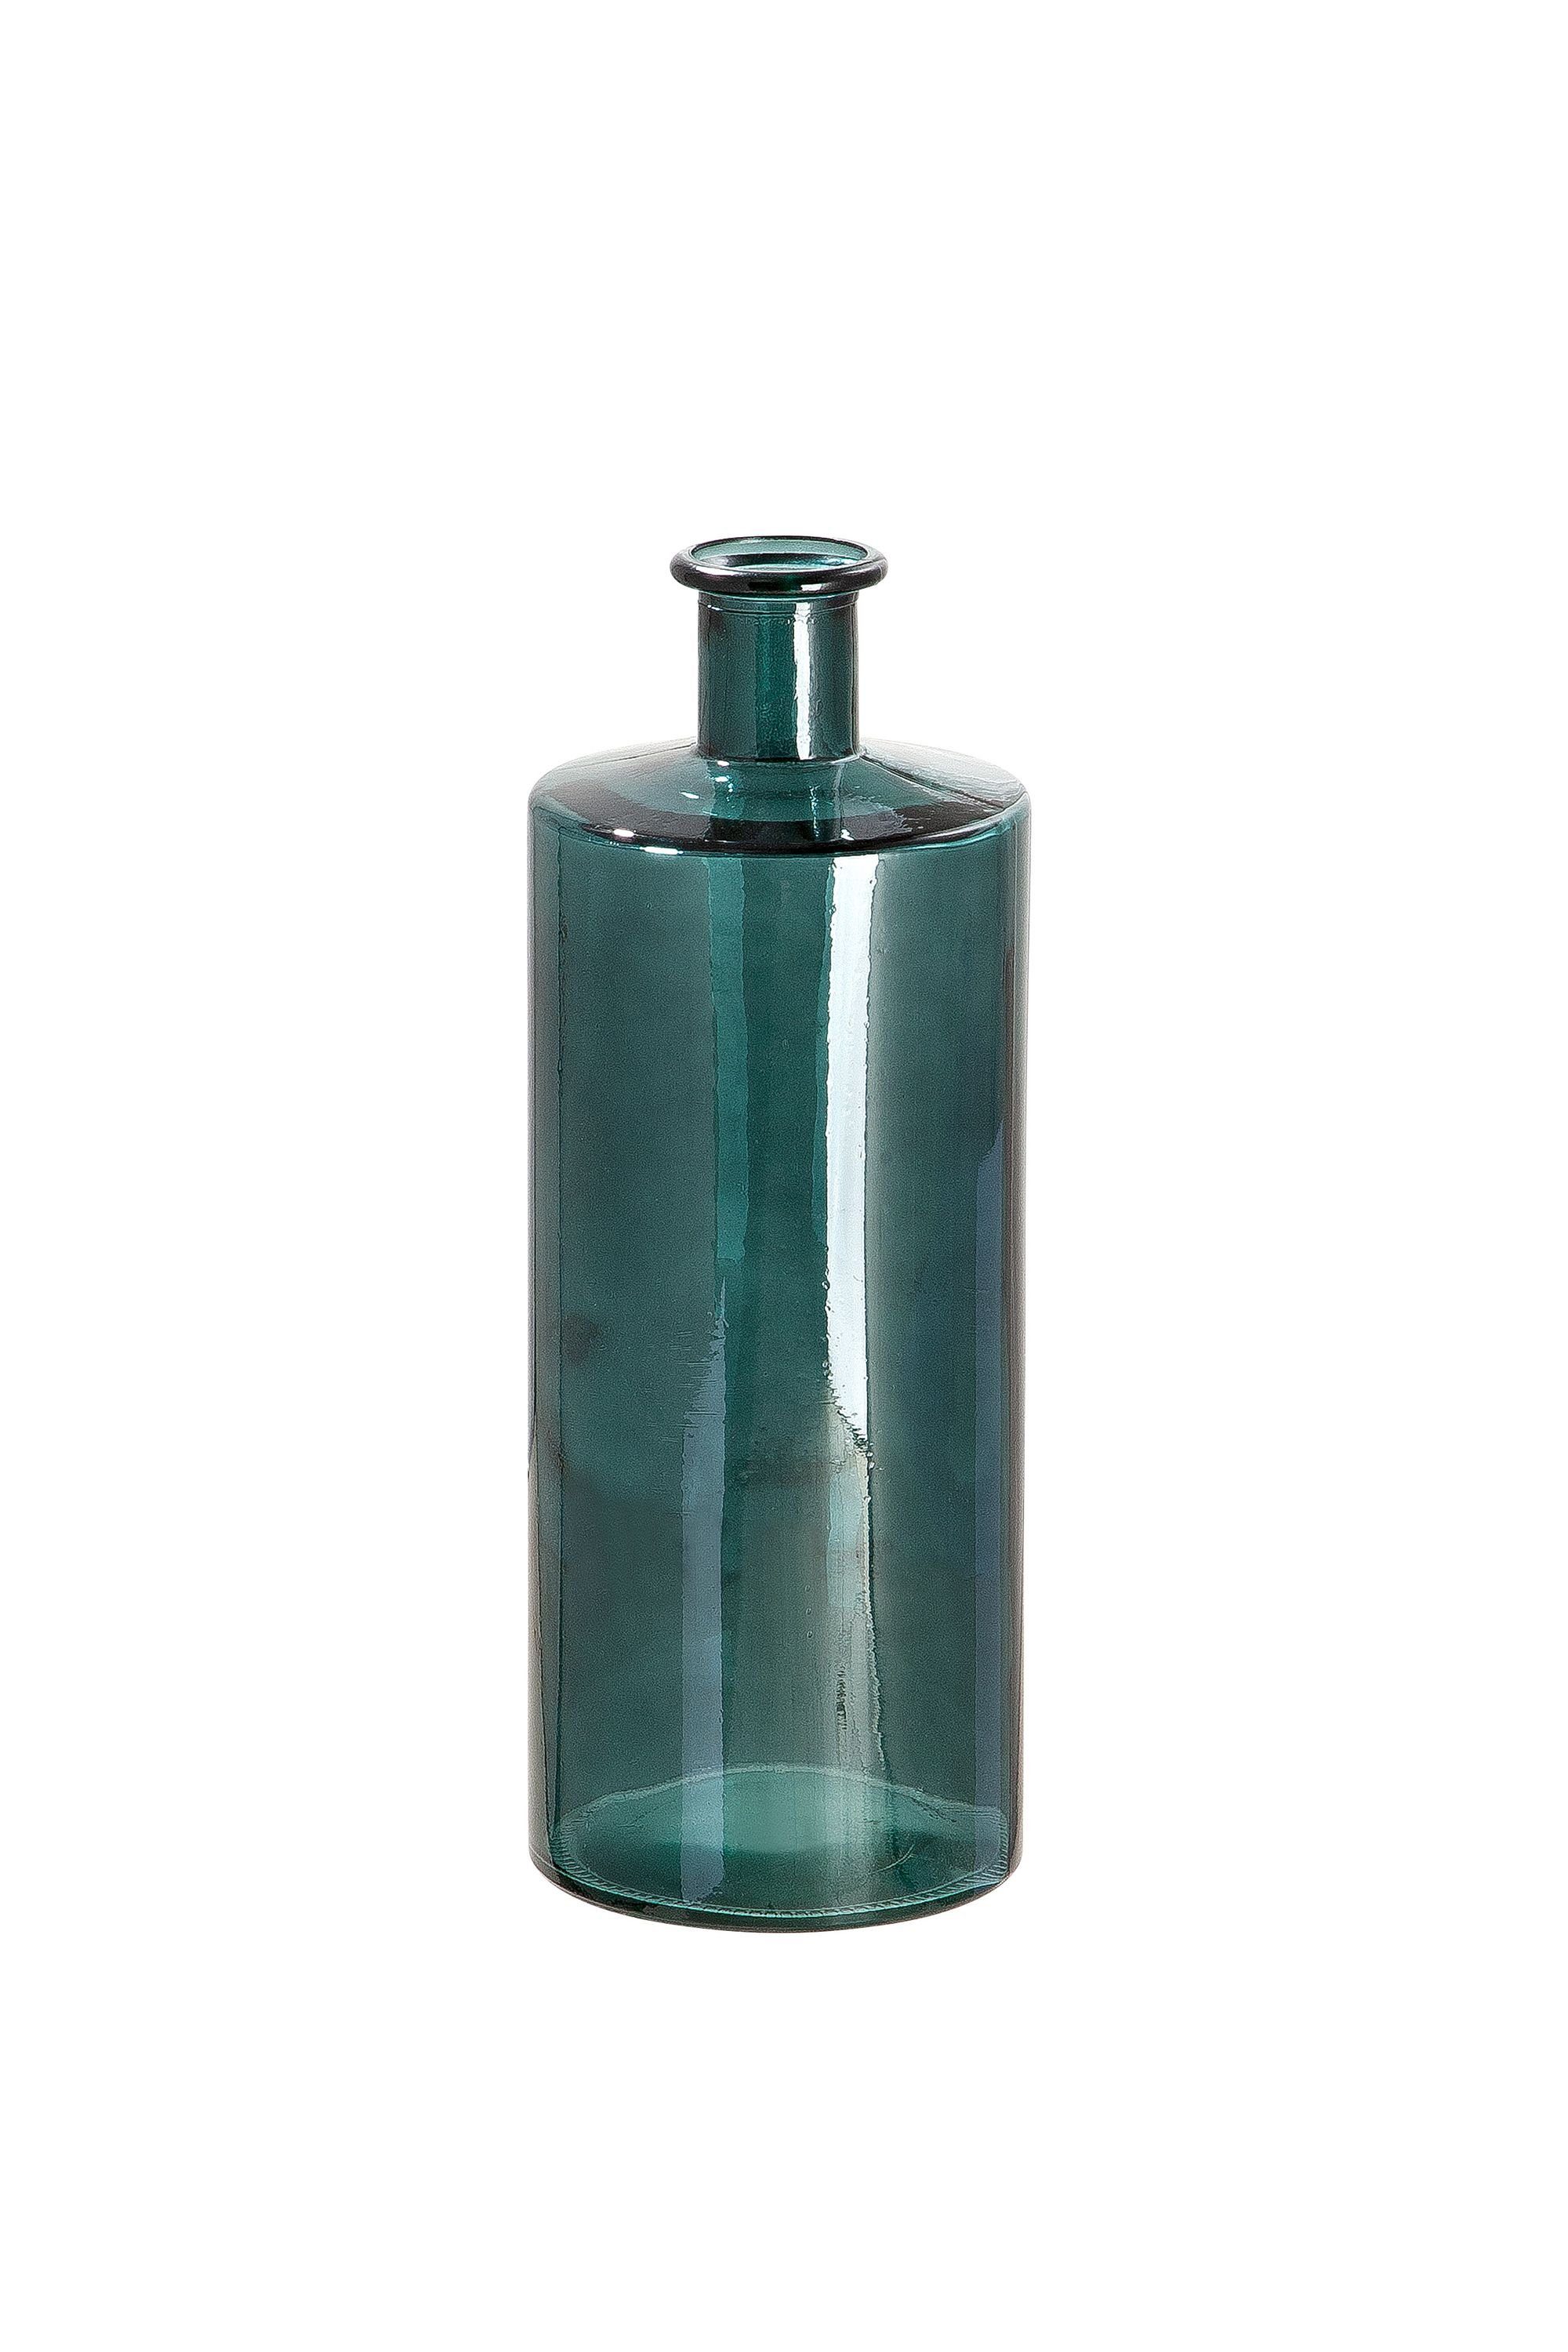 GILDE Dekovase GILDE Vase Arturo - petrol - H. 75cm x D. 25cm | Deko-Objekte